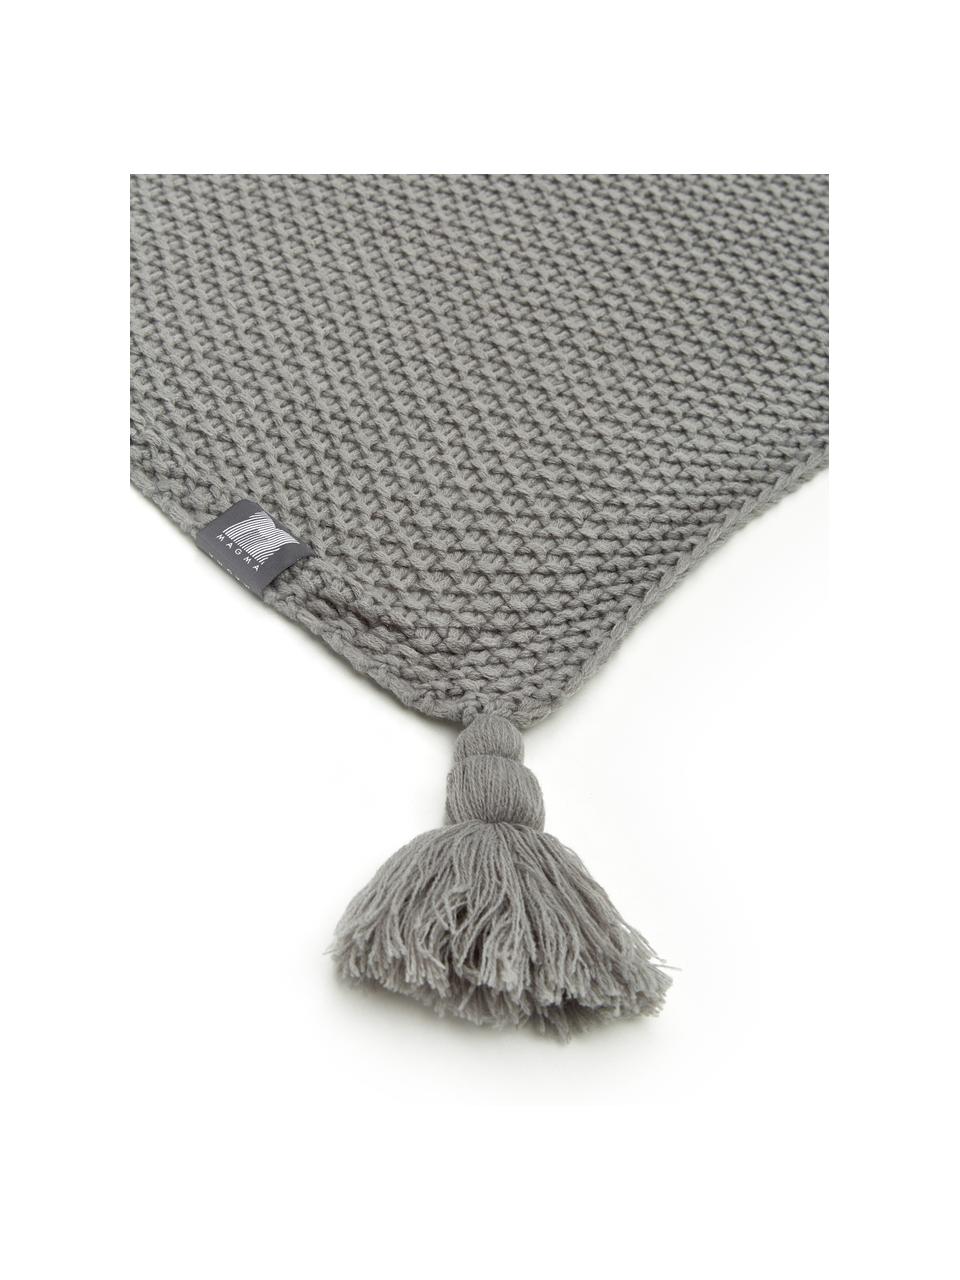 Leichte Strickdecke Lisette in Grau mit Quasten, 100% Polyacryl, Grau, 130 x 170 cm